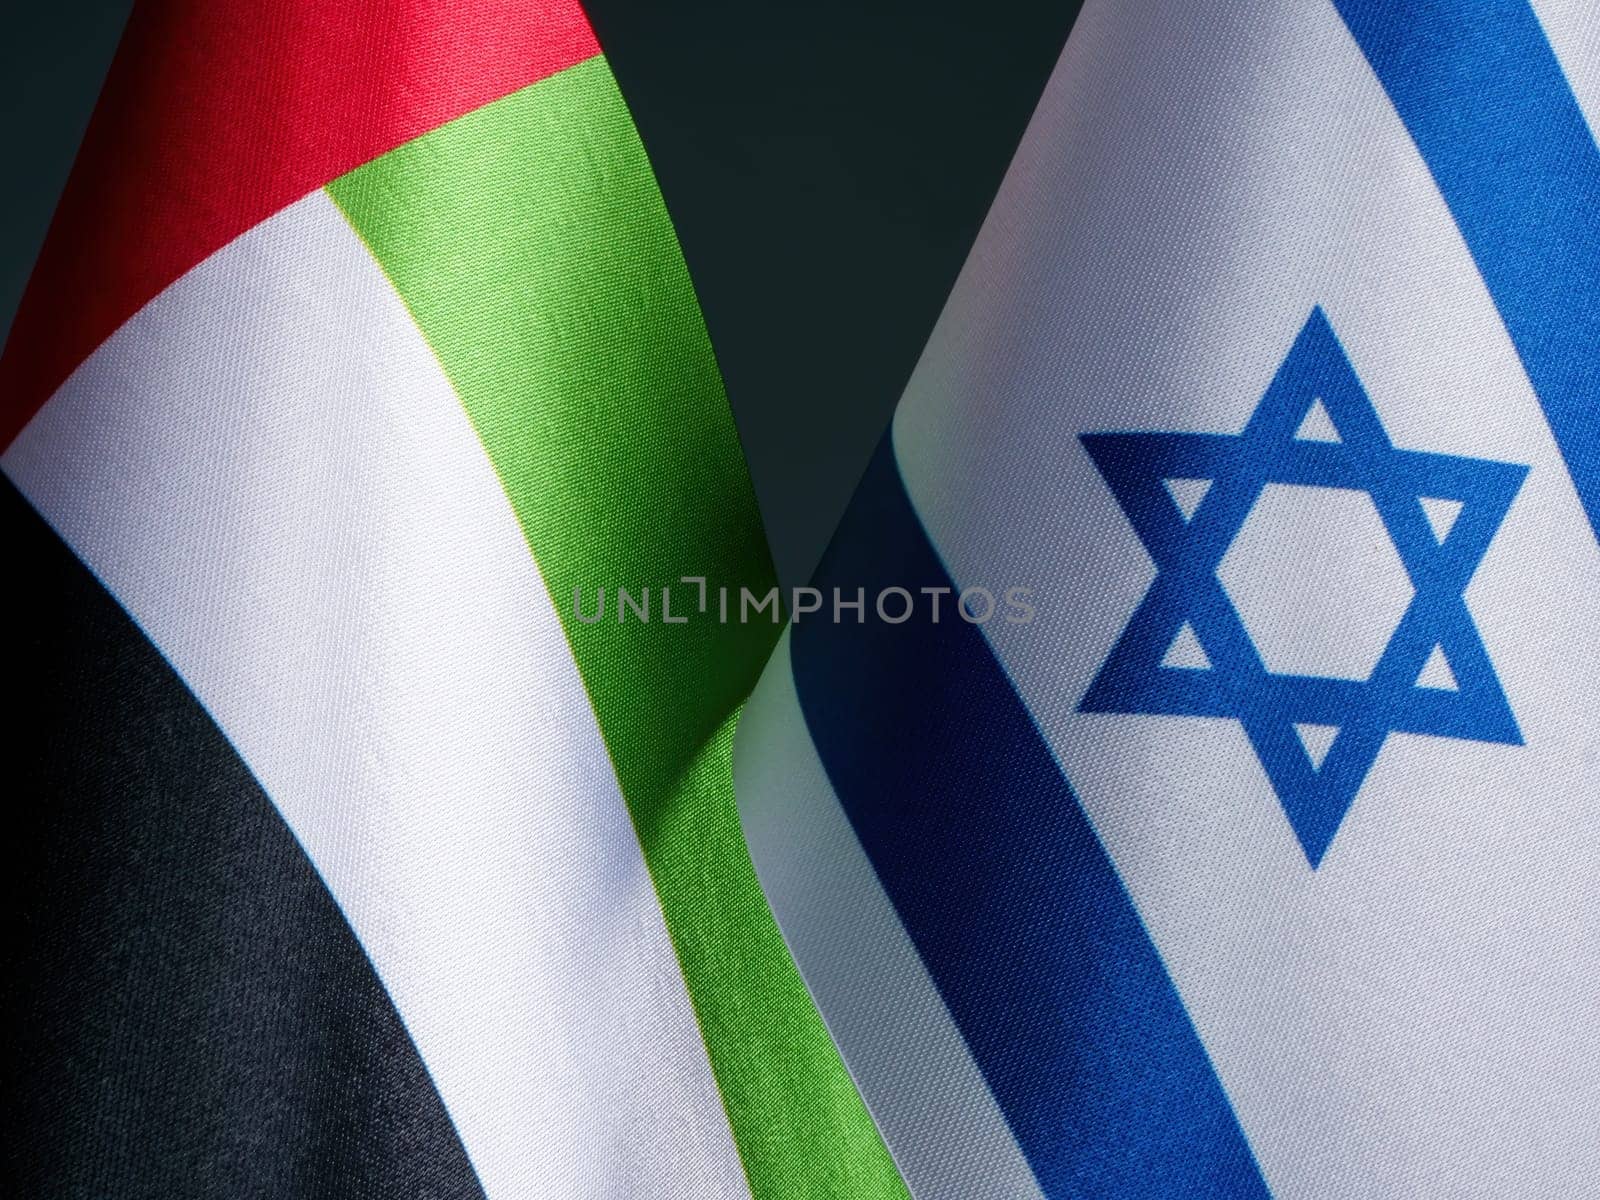 Small Flags of UAE United Arab Emirates and Israel.